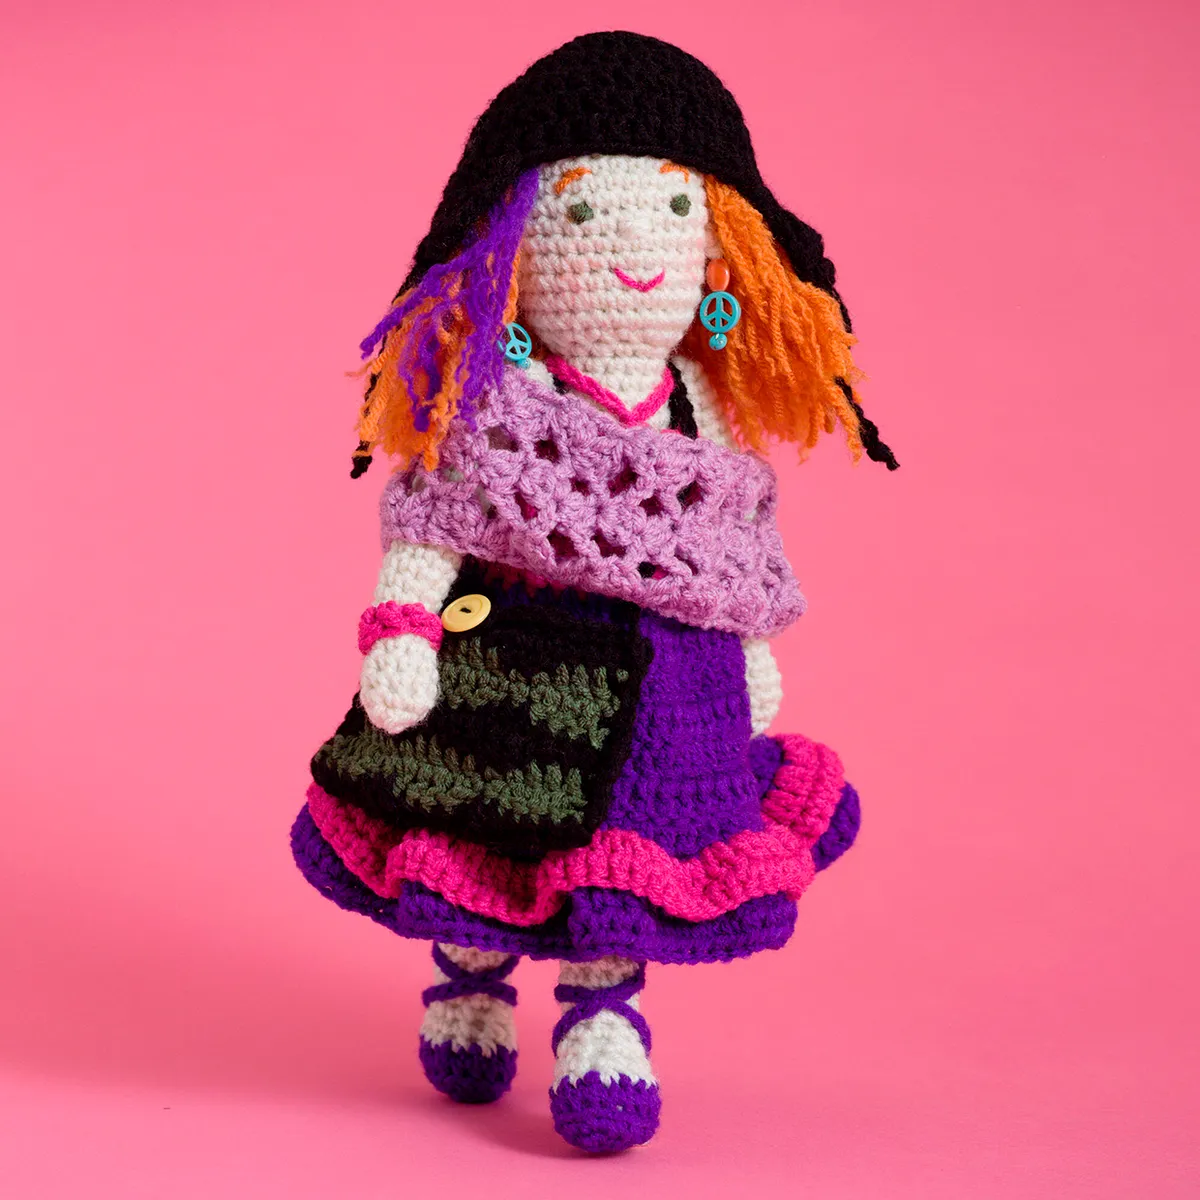 artistic Annie - free crochet doll pattern